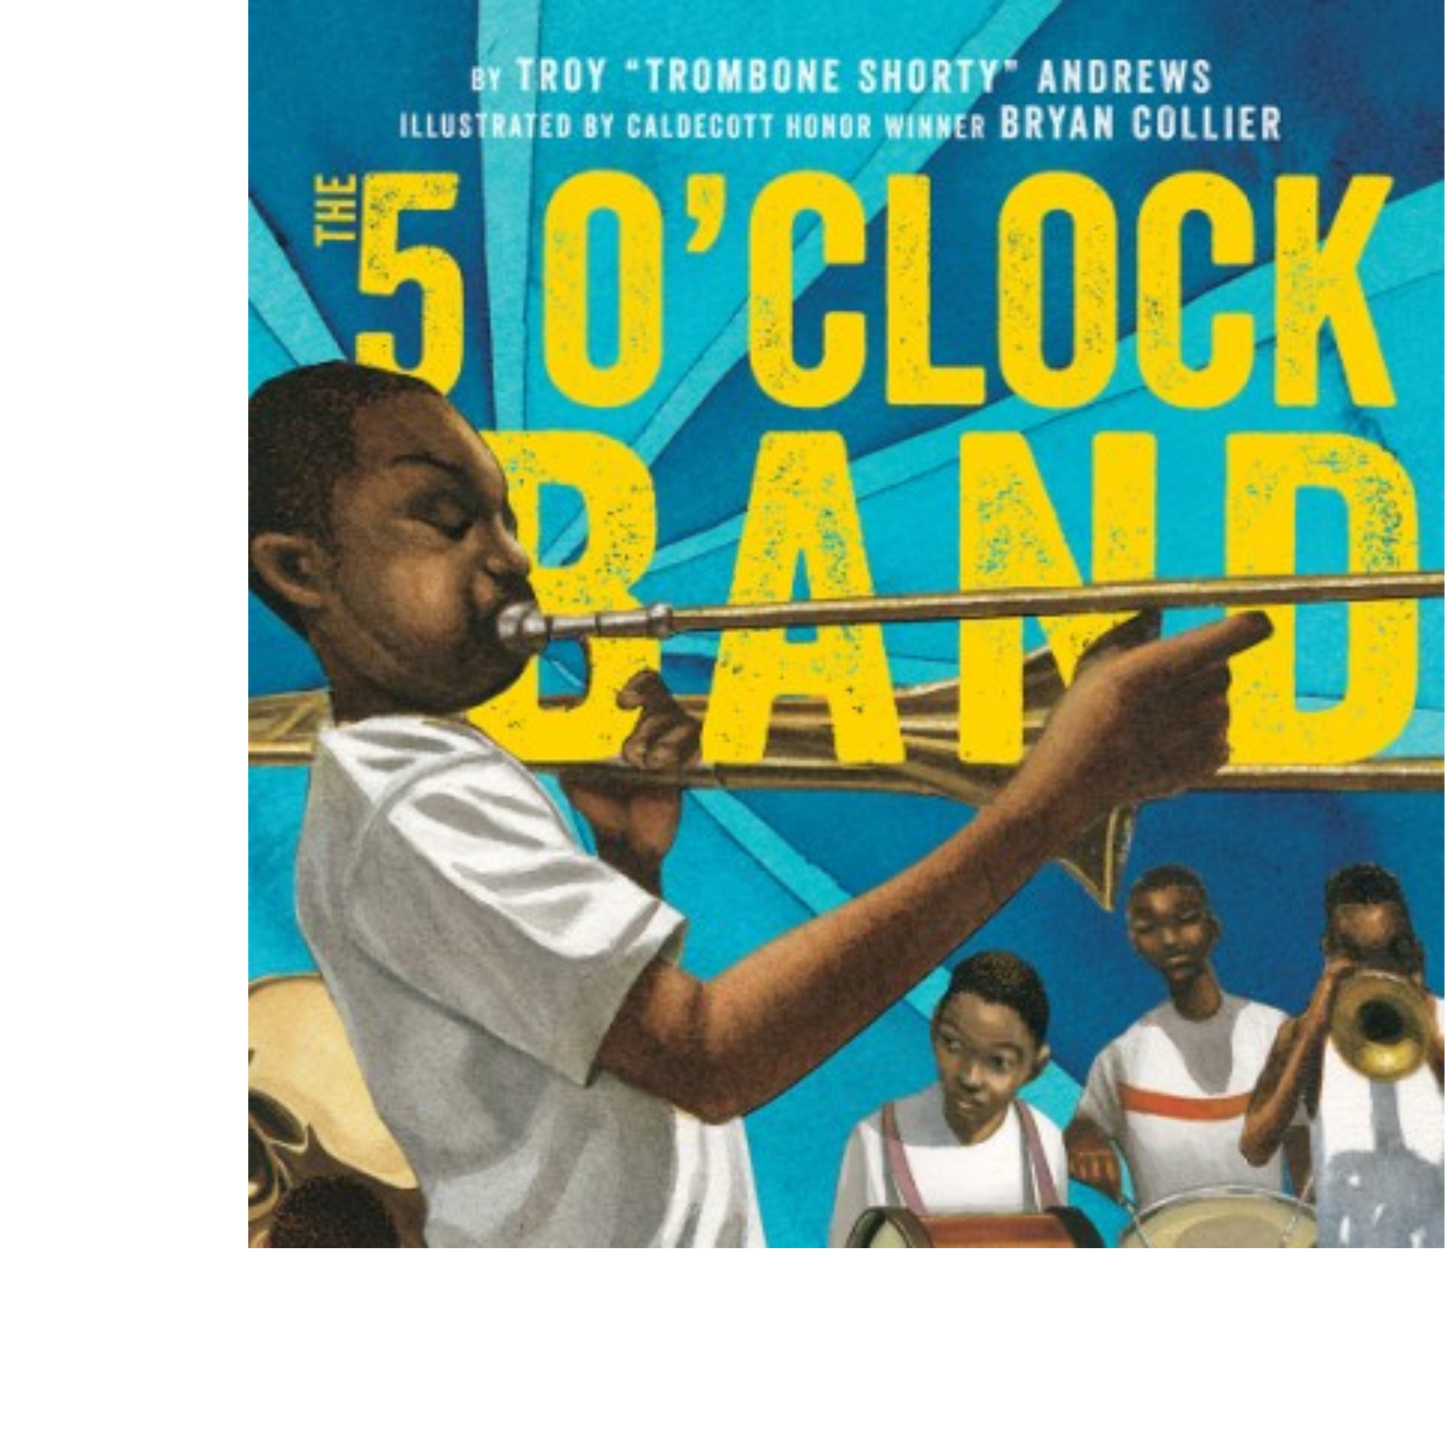 the 5 oclock band troy trombone shorty andrews